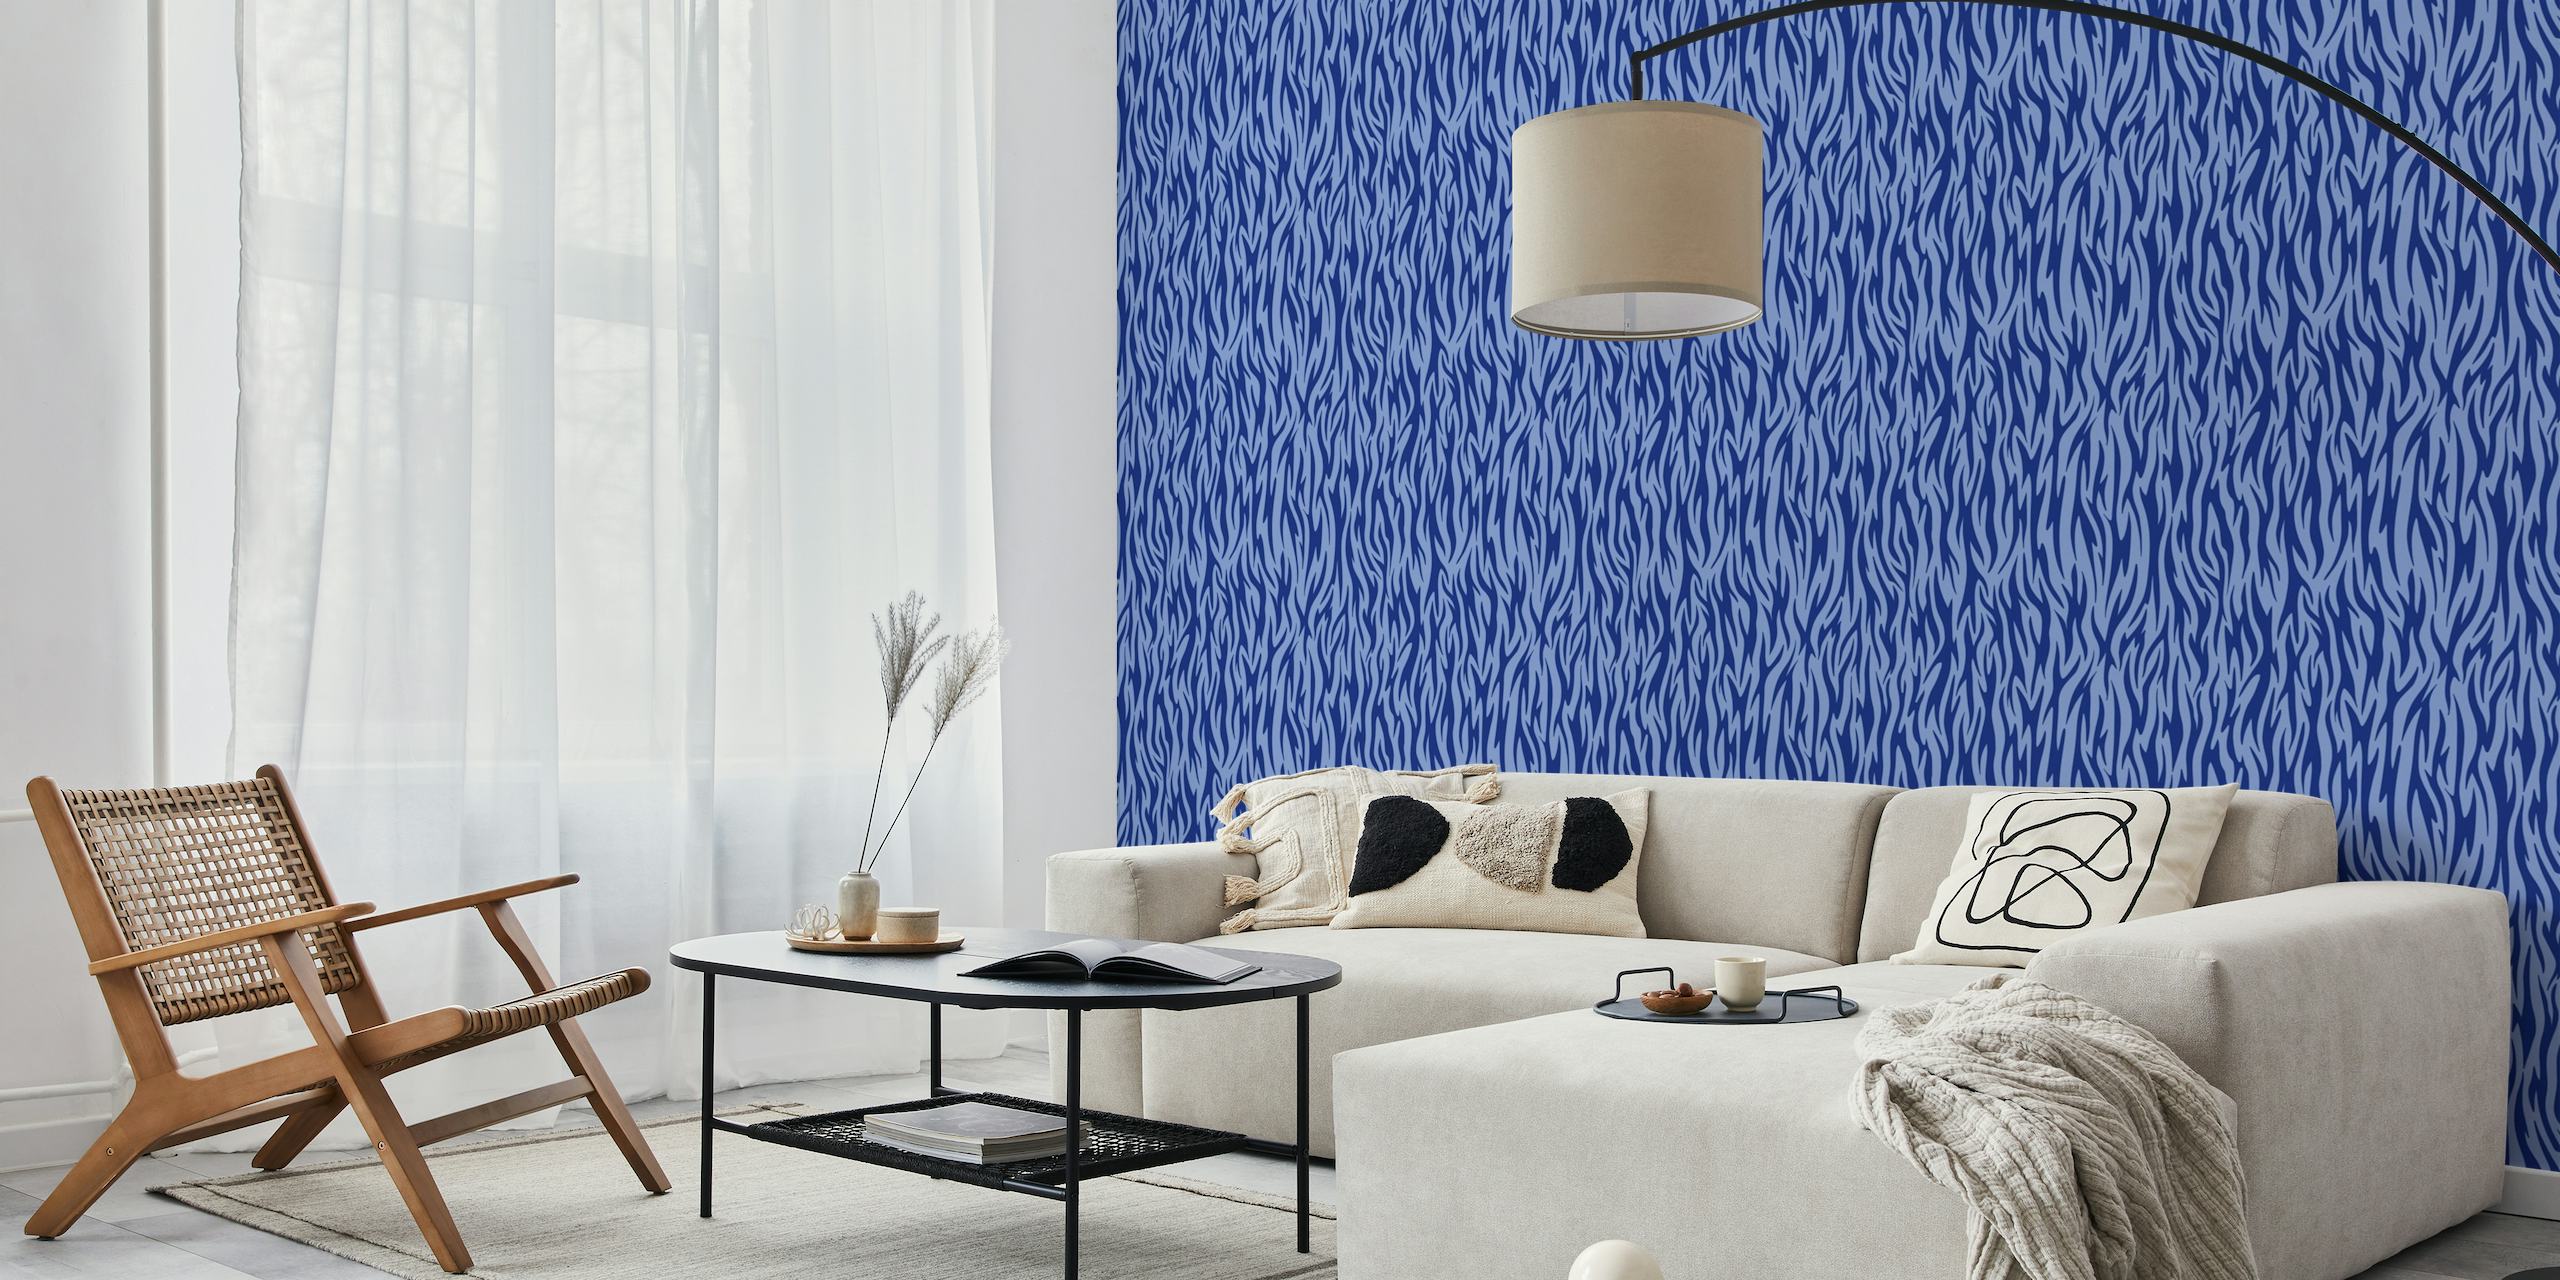 Abstract tigerprint blue behang